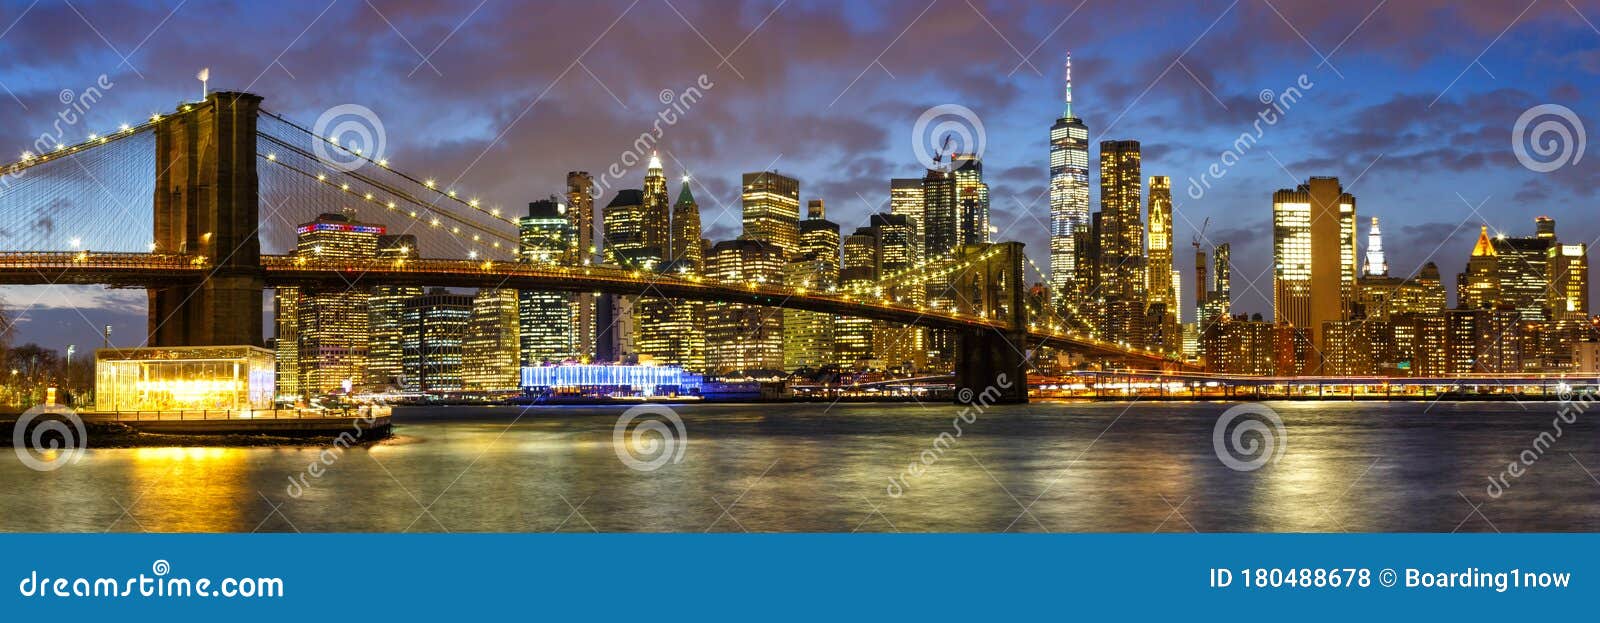 new york city skyline night manhattan town panorama brooklyn bridge world trade center